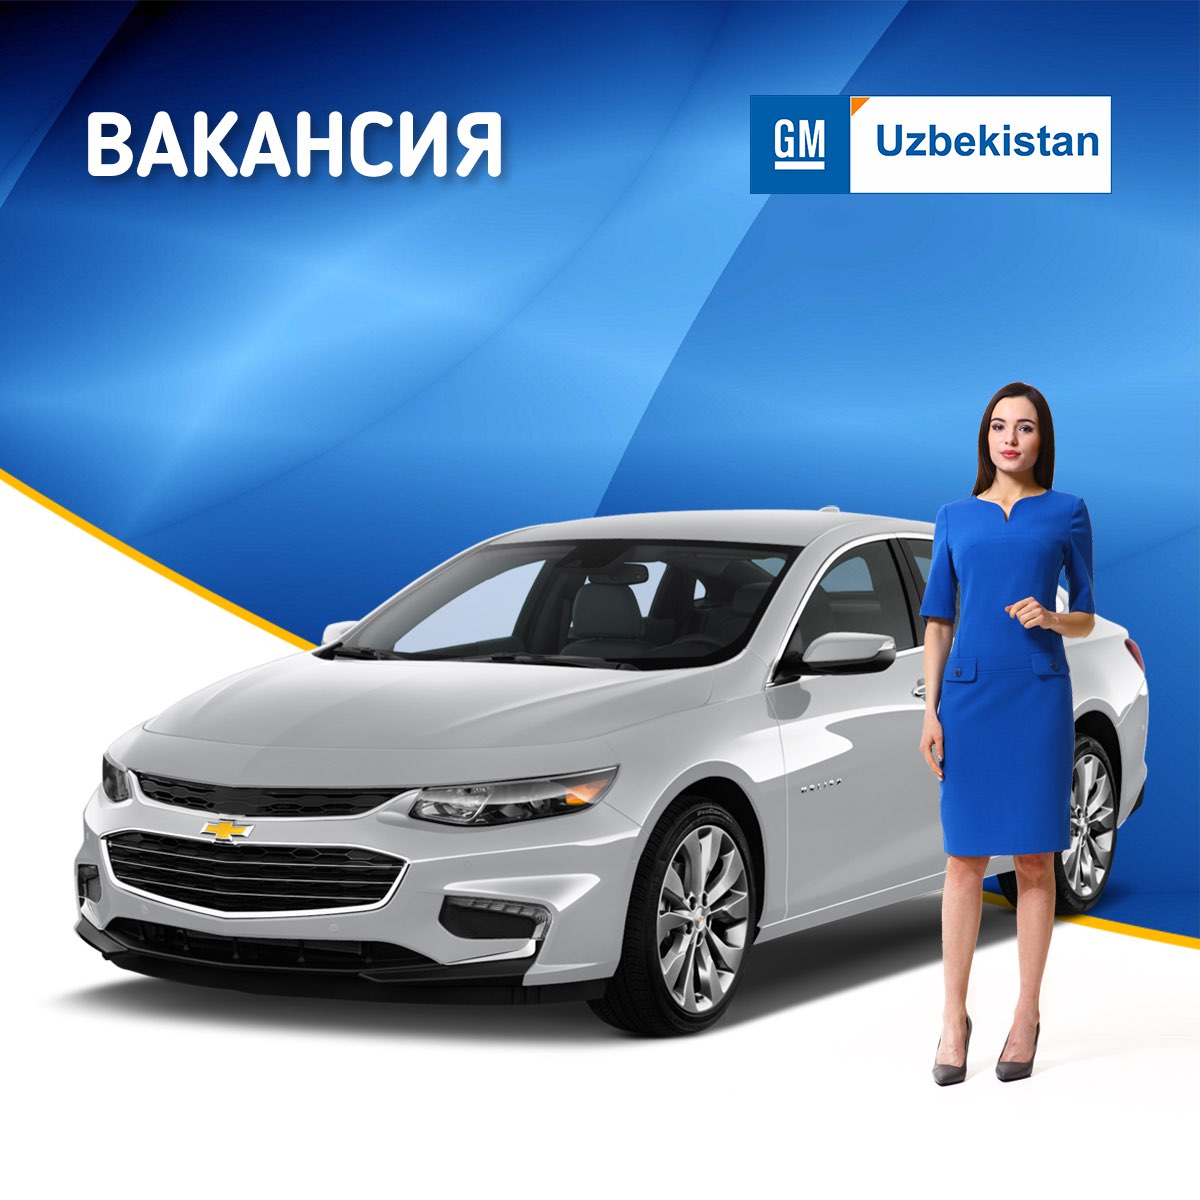 Вакансии от GM Uzbekistan!